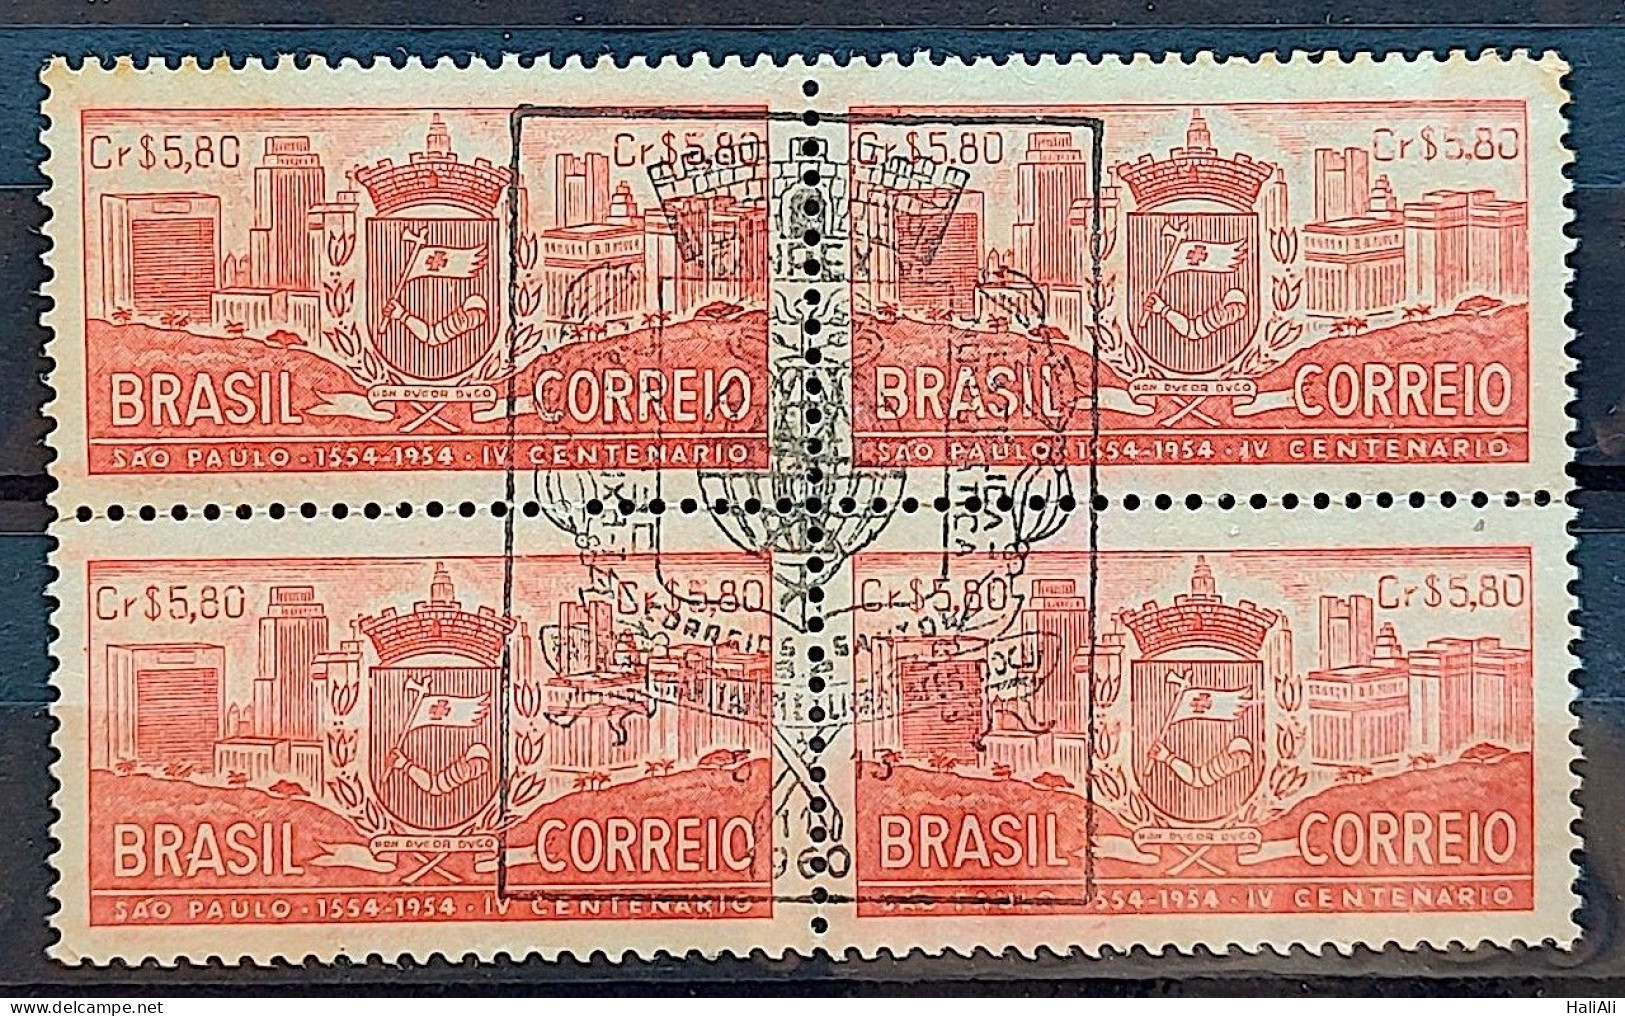 C 332 Brazil Stamp 4 Centenary Of Sao Paulo 1954 Block Of 4 CBC SP - Neufs